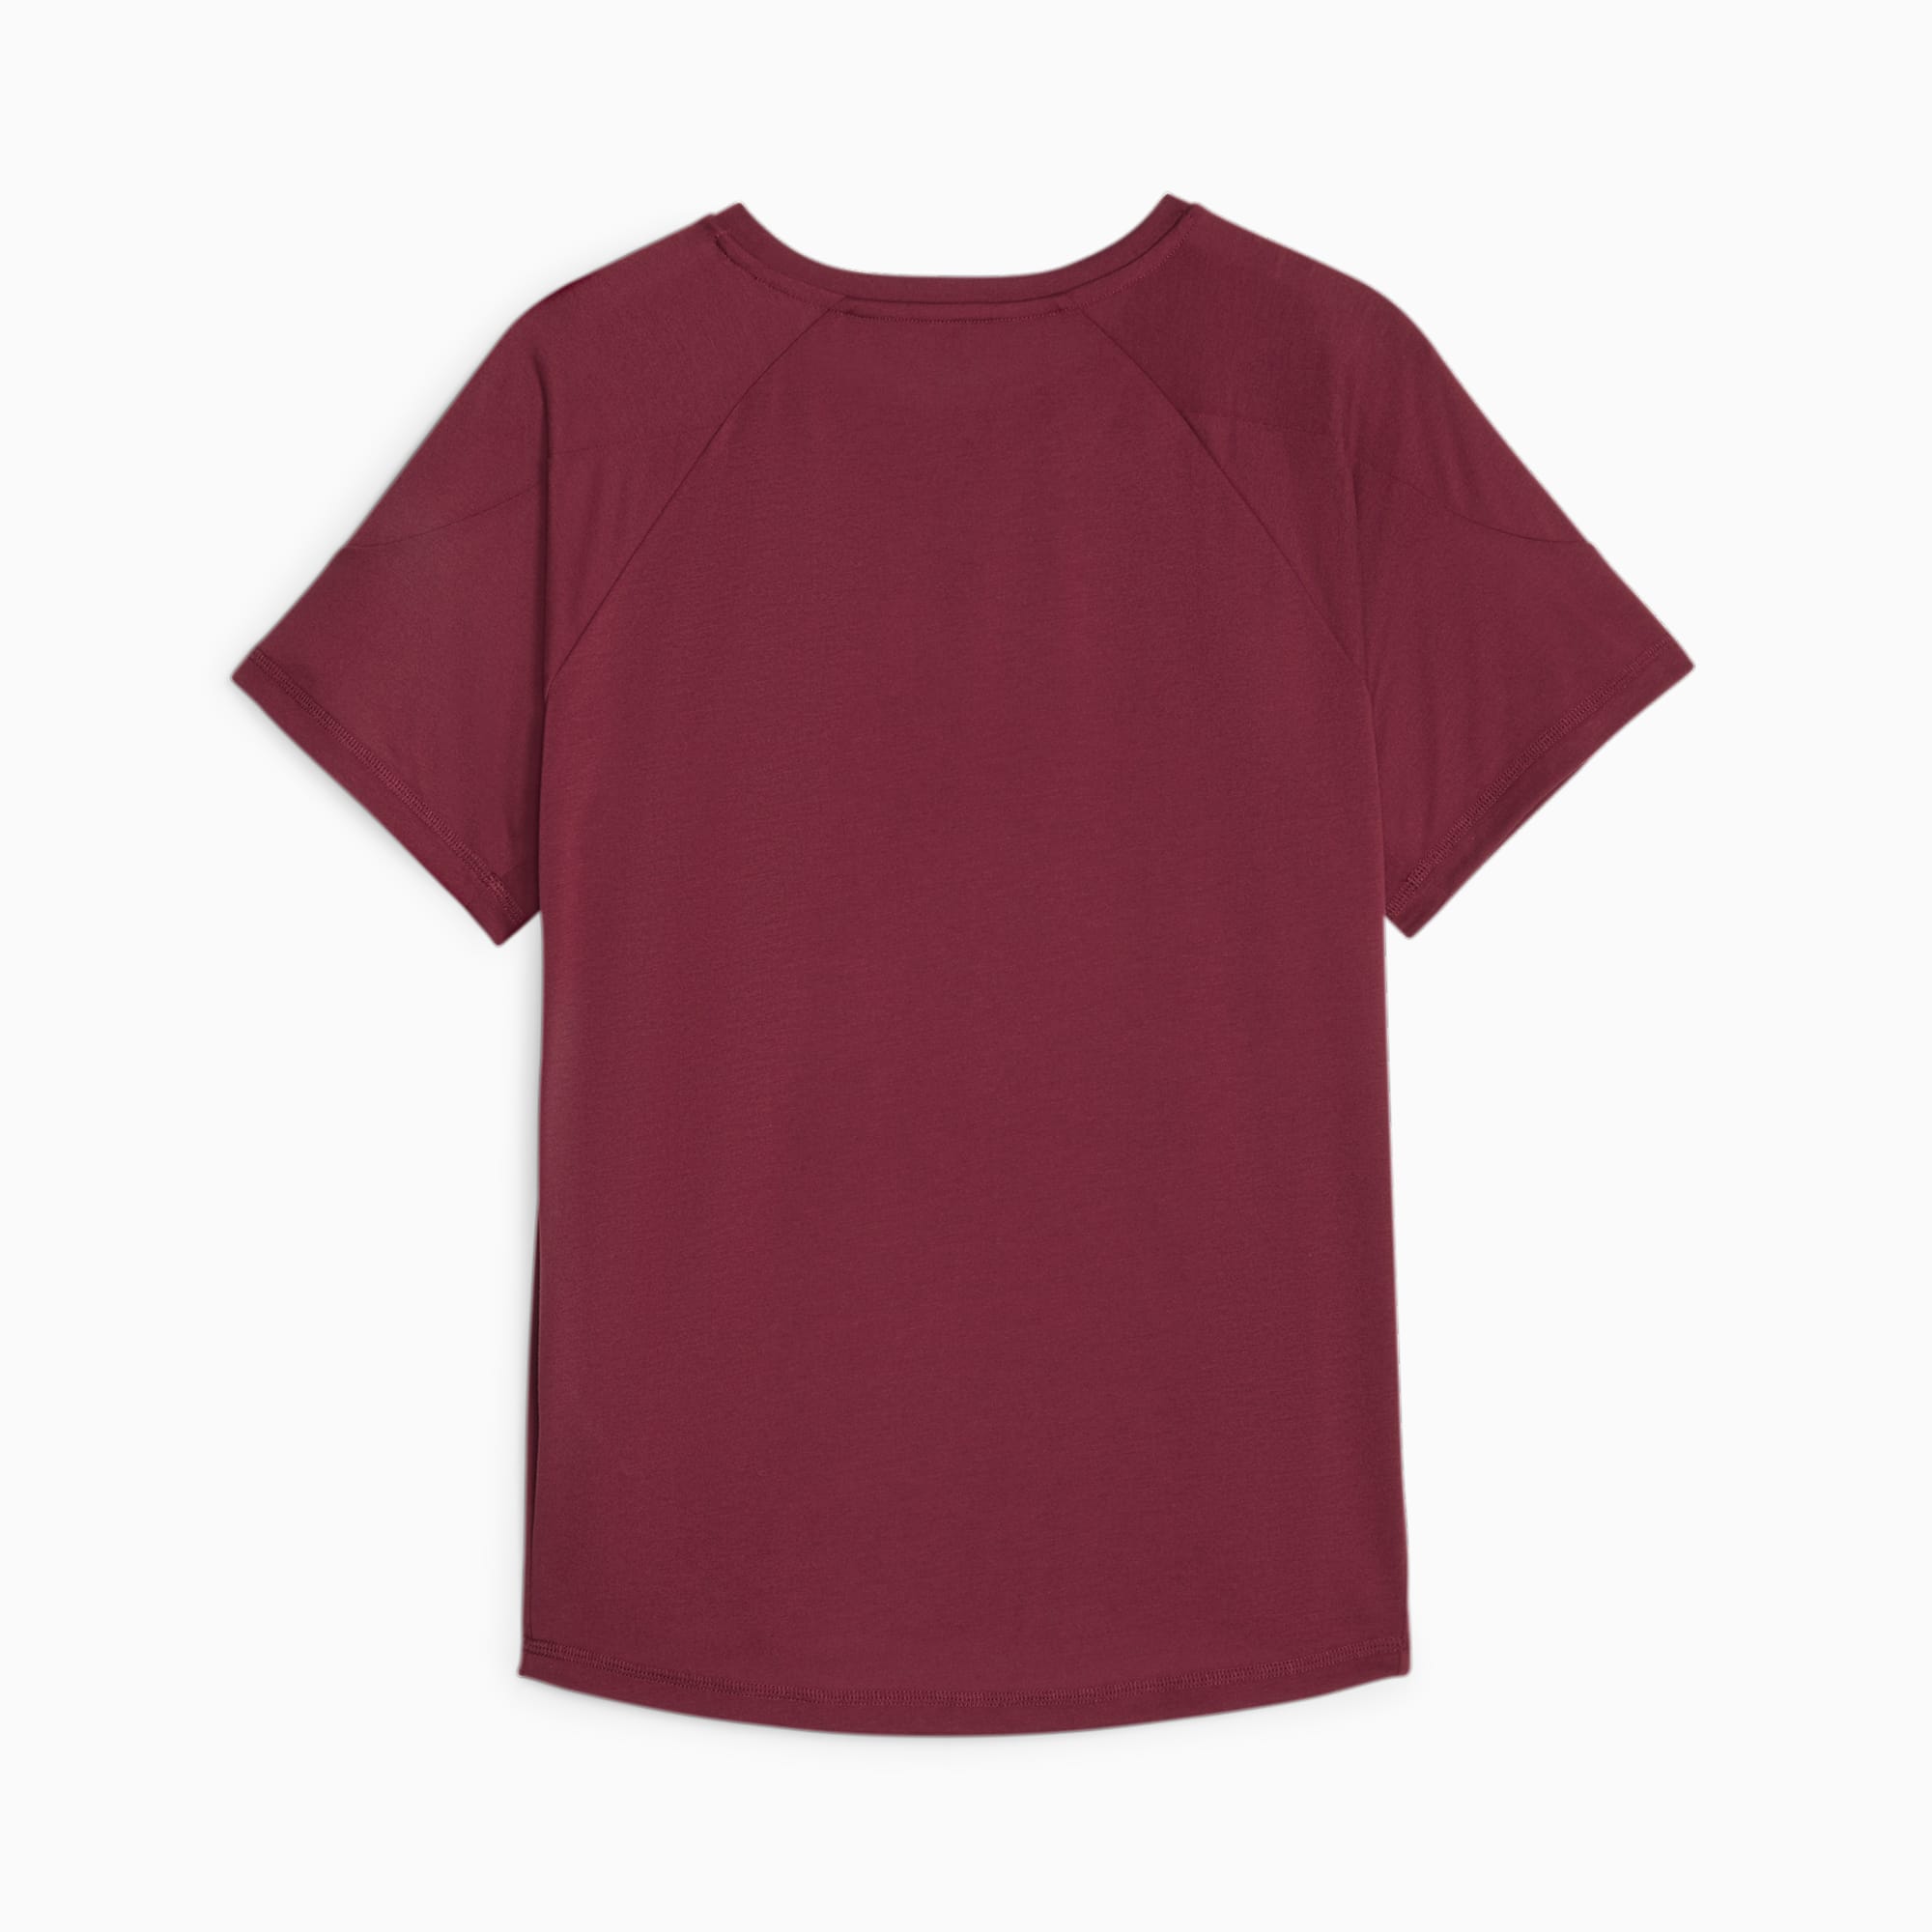 PUMA Evostripe Women's T-Shirt, Dark Jasper, Size XS, Clothing